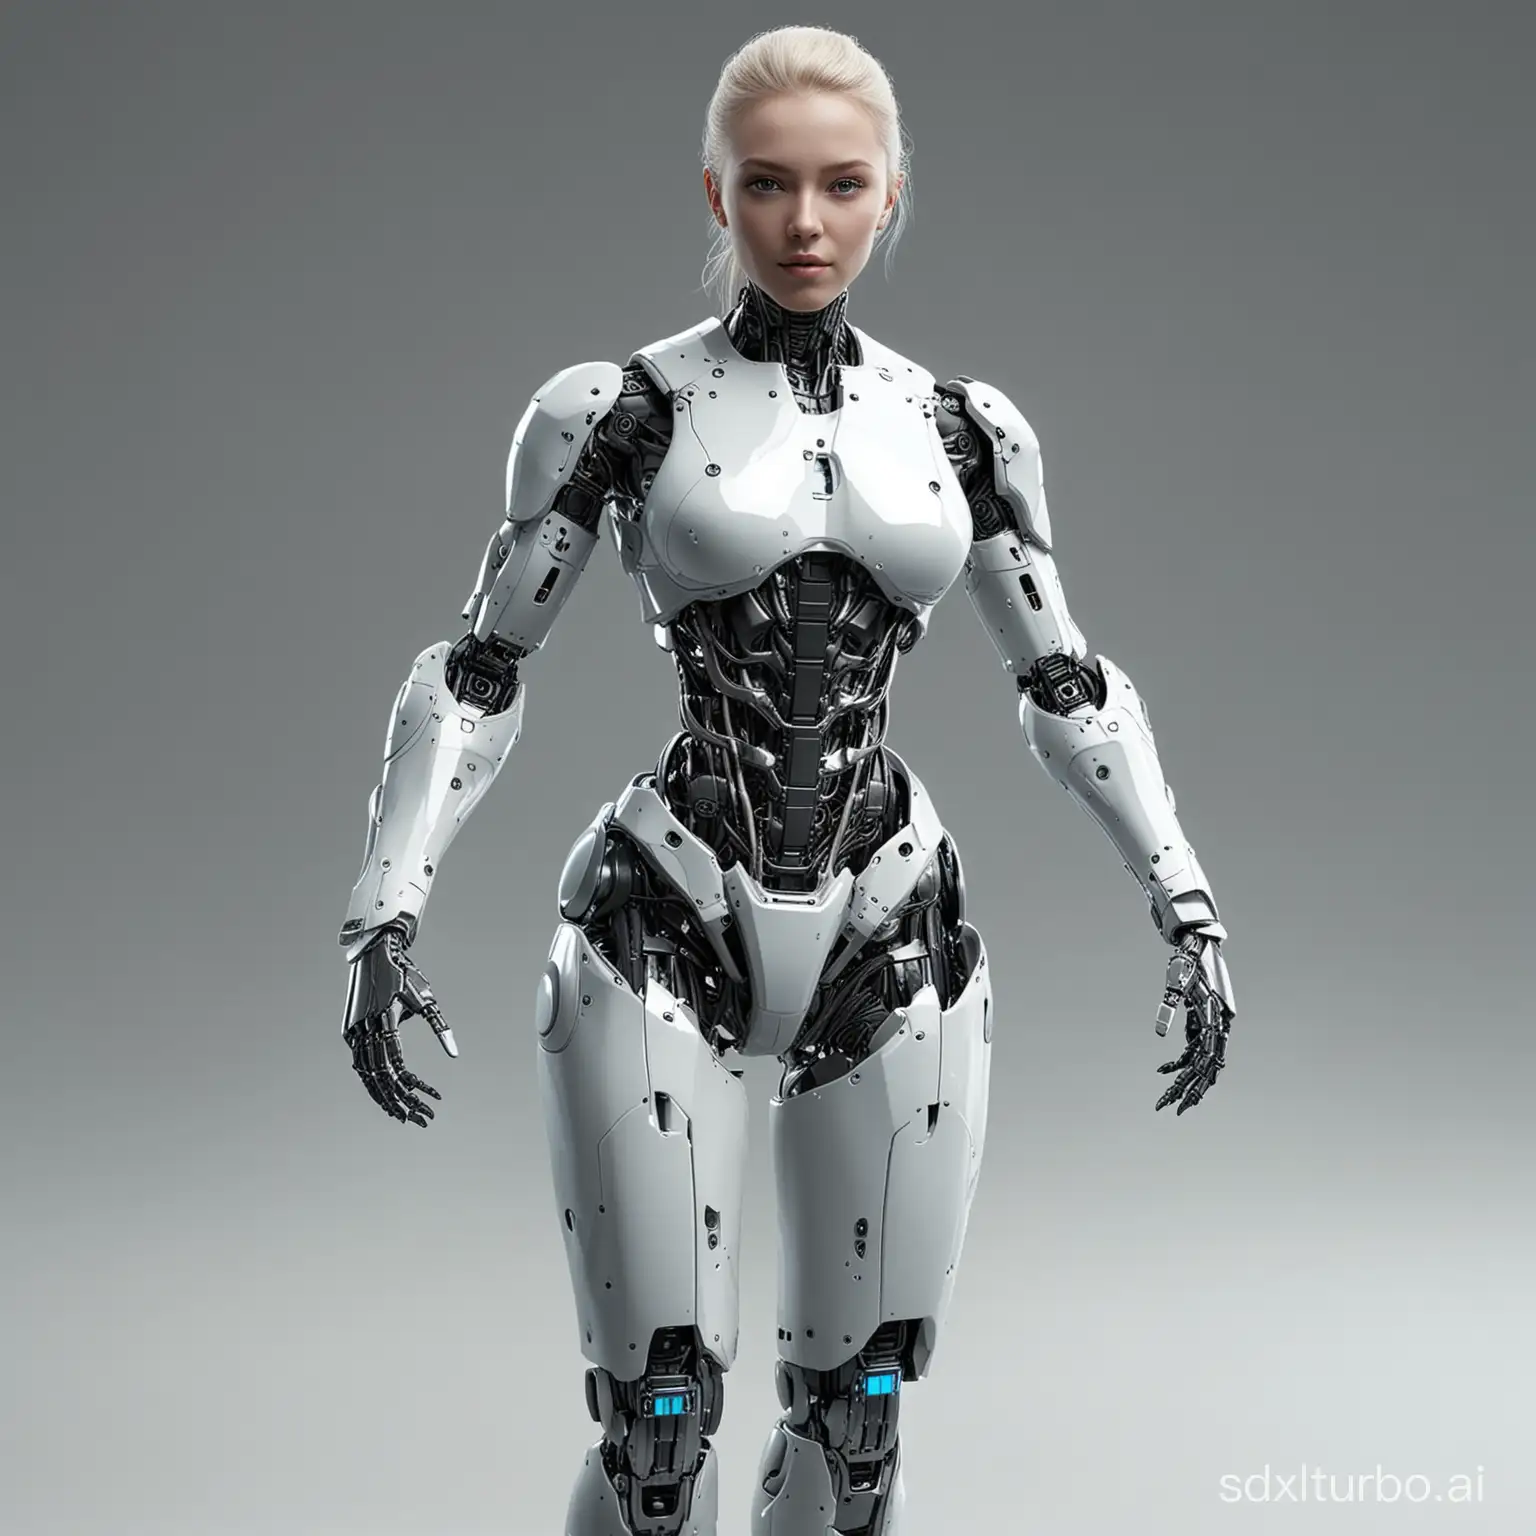 Futuristic and dynamic robot, humanoid style, full-body image, female